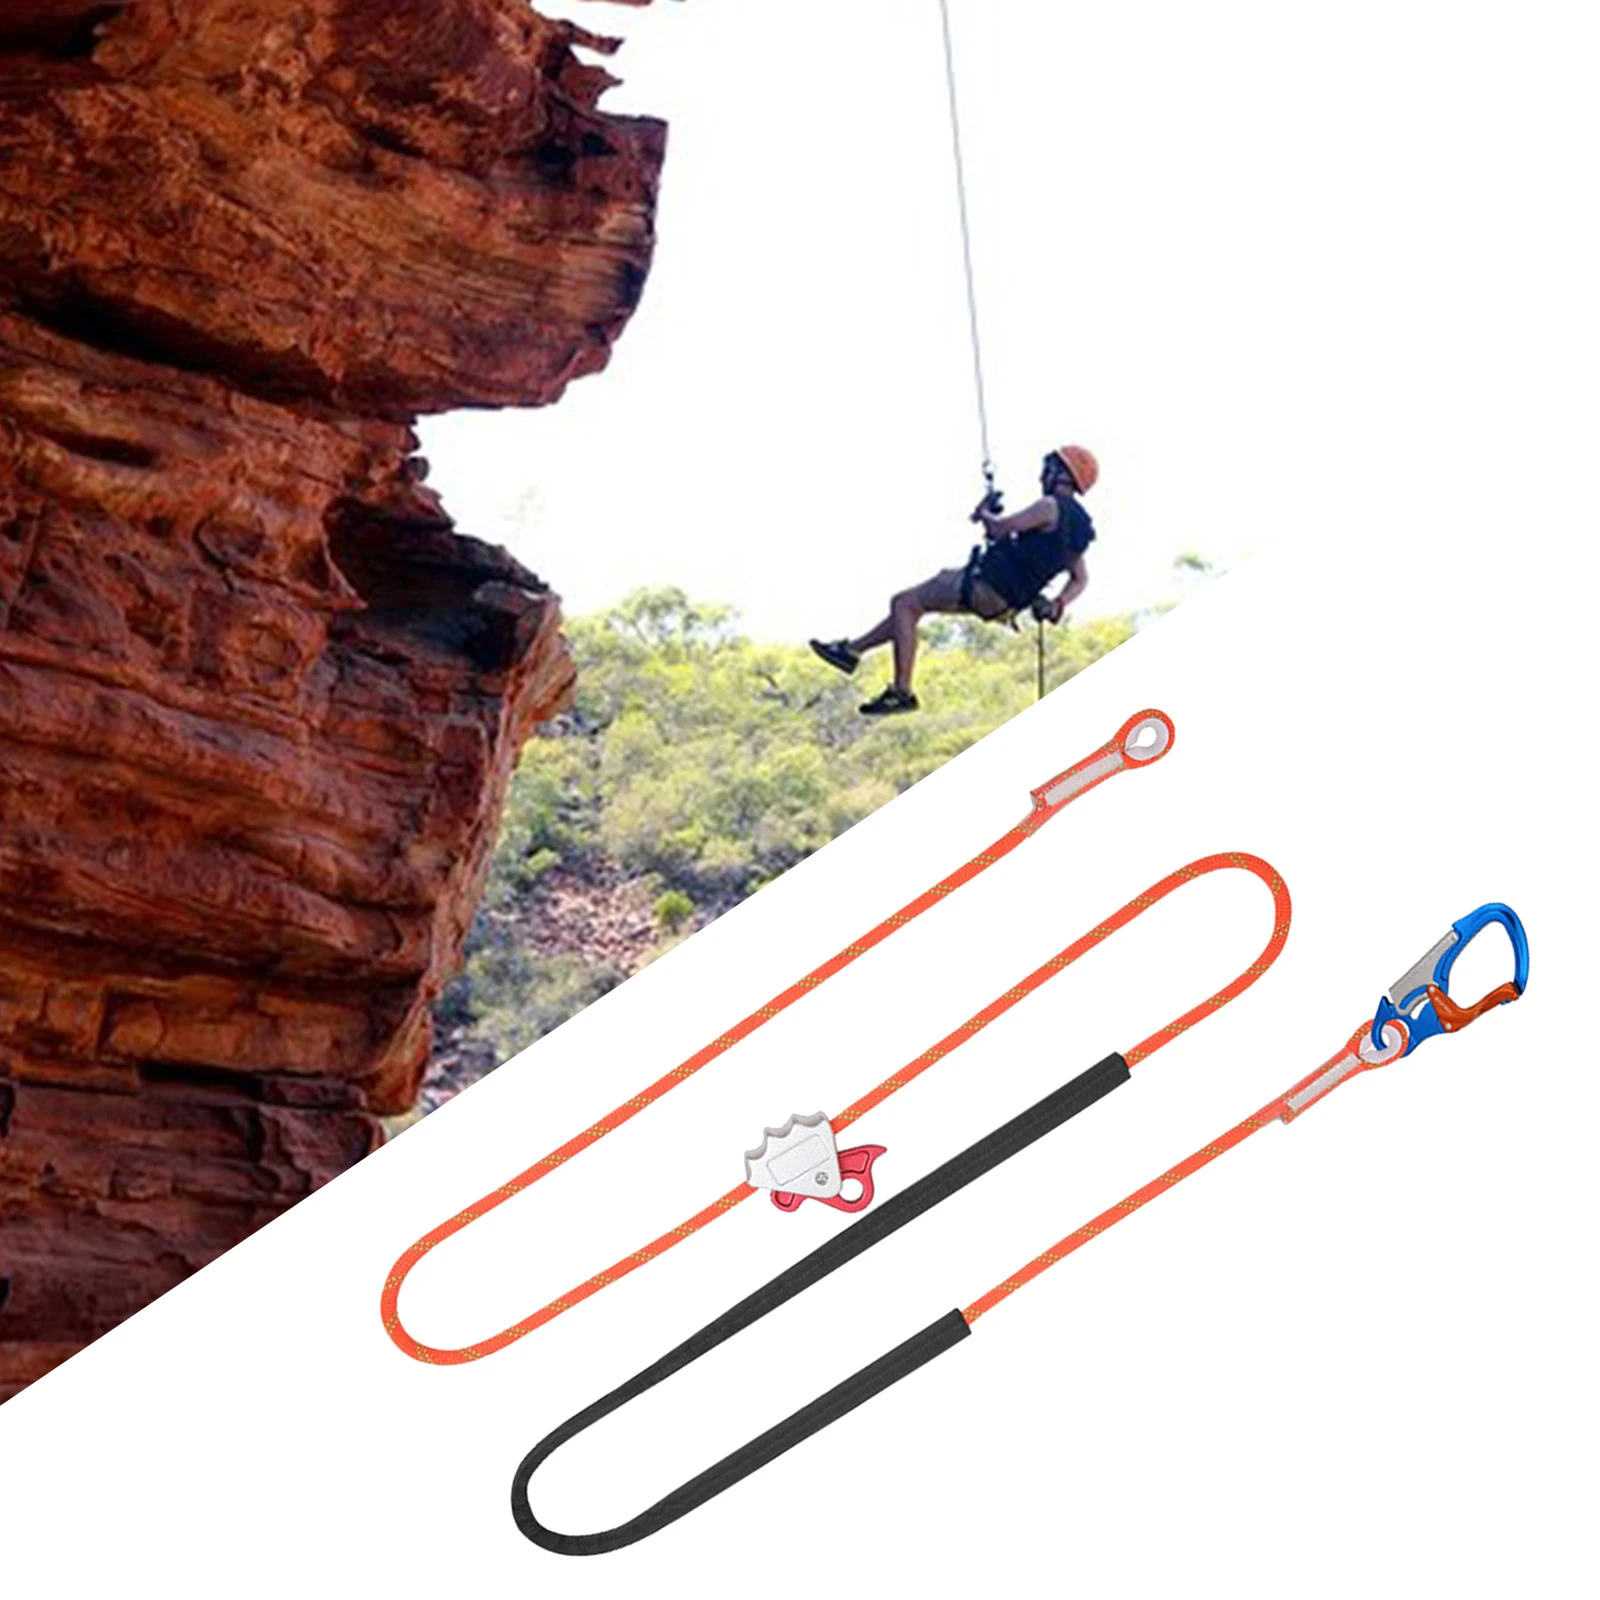   Climbing Adjustable Positioning Lanyard Rope Cut Resistant Fall